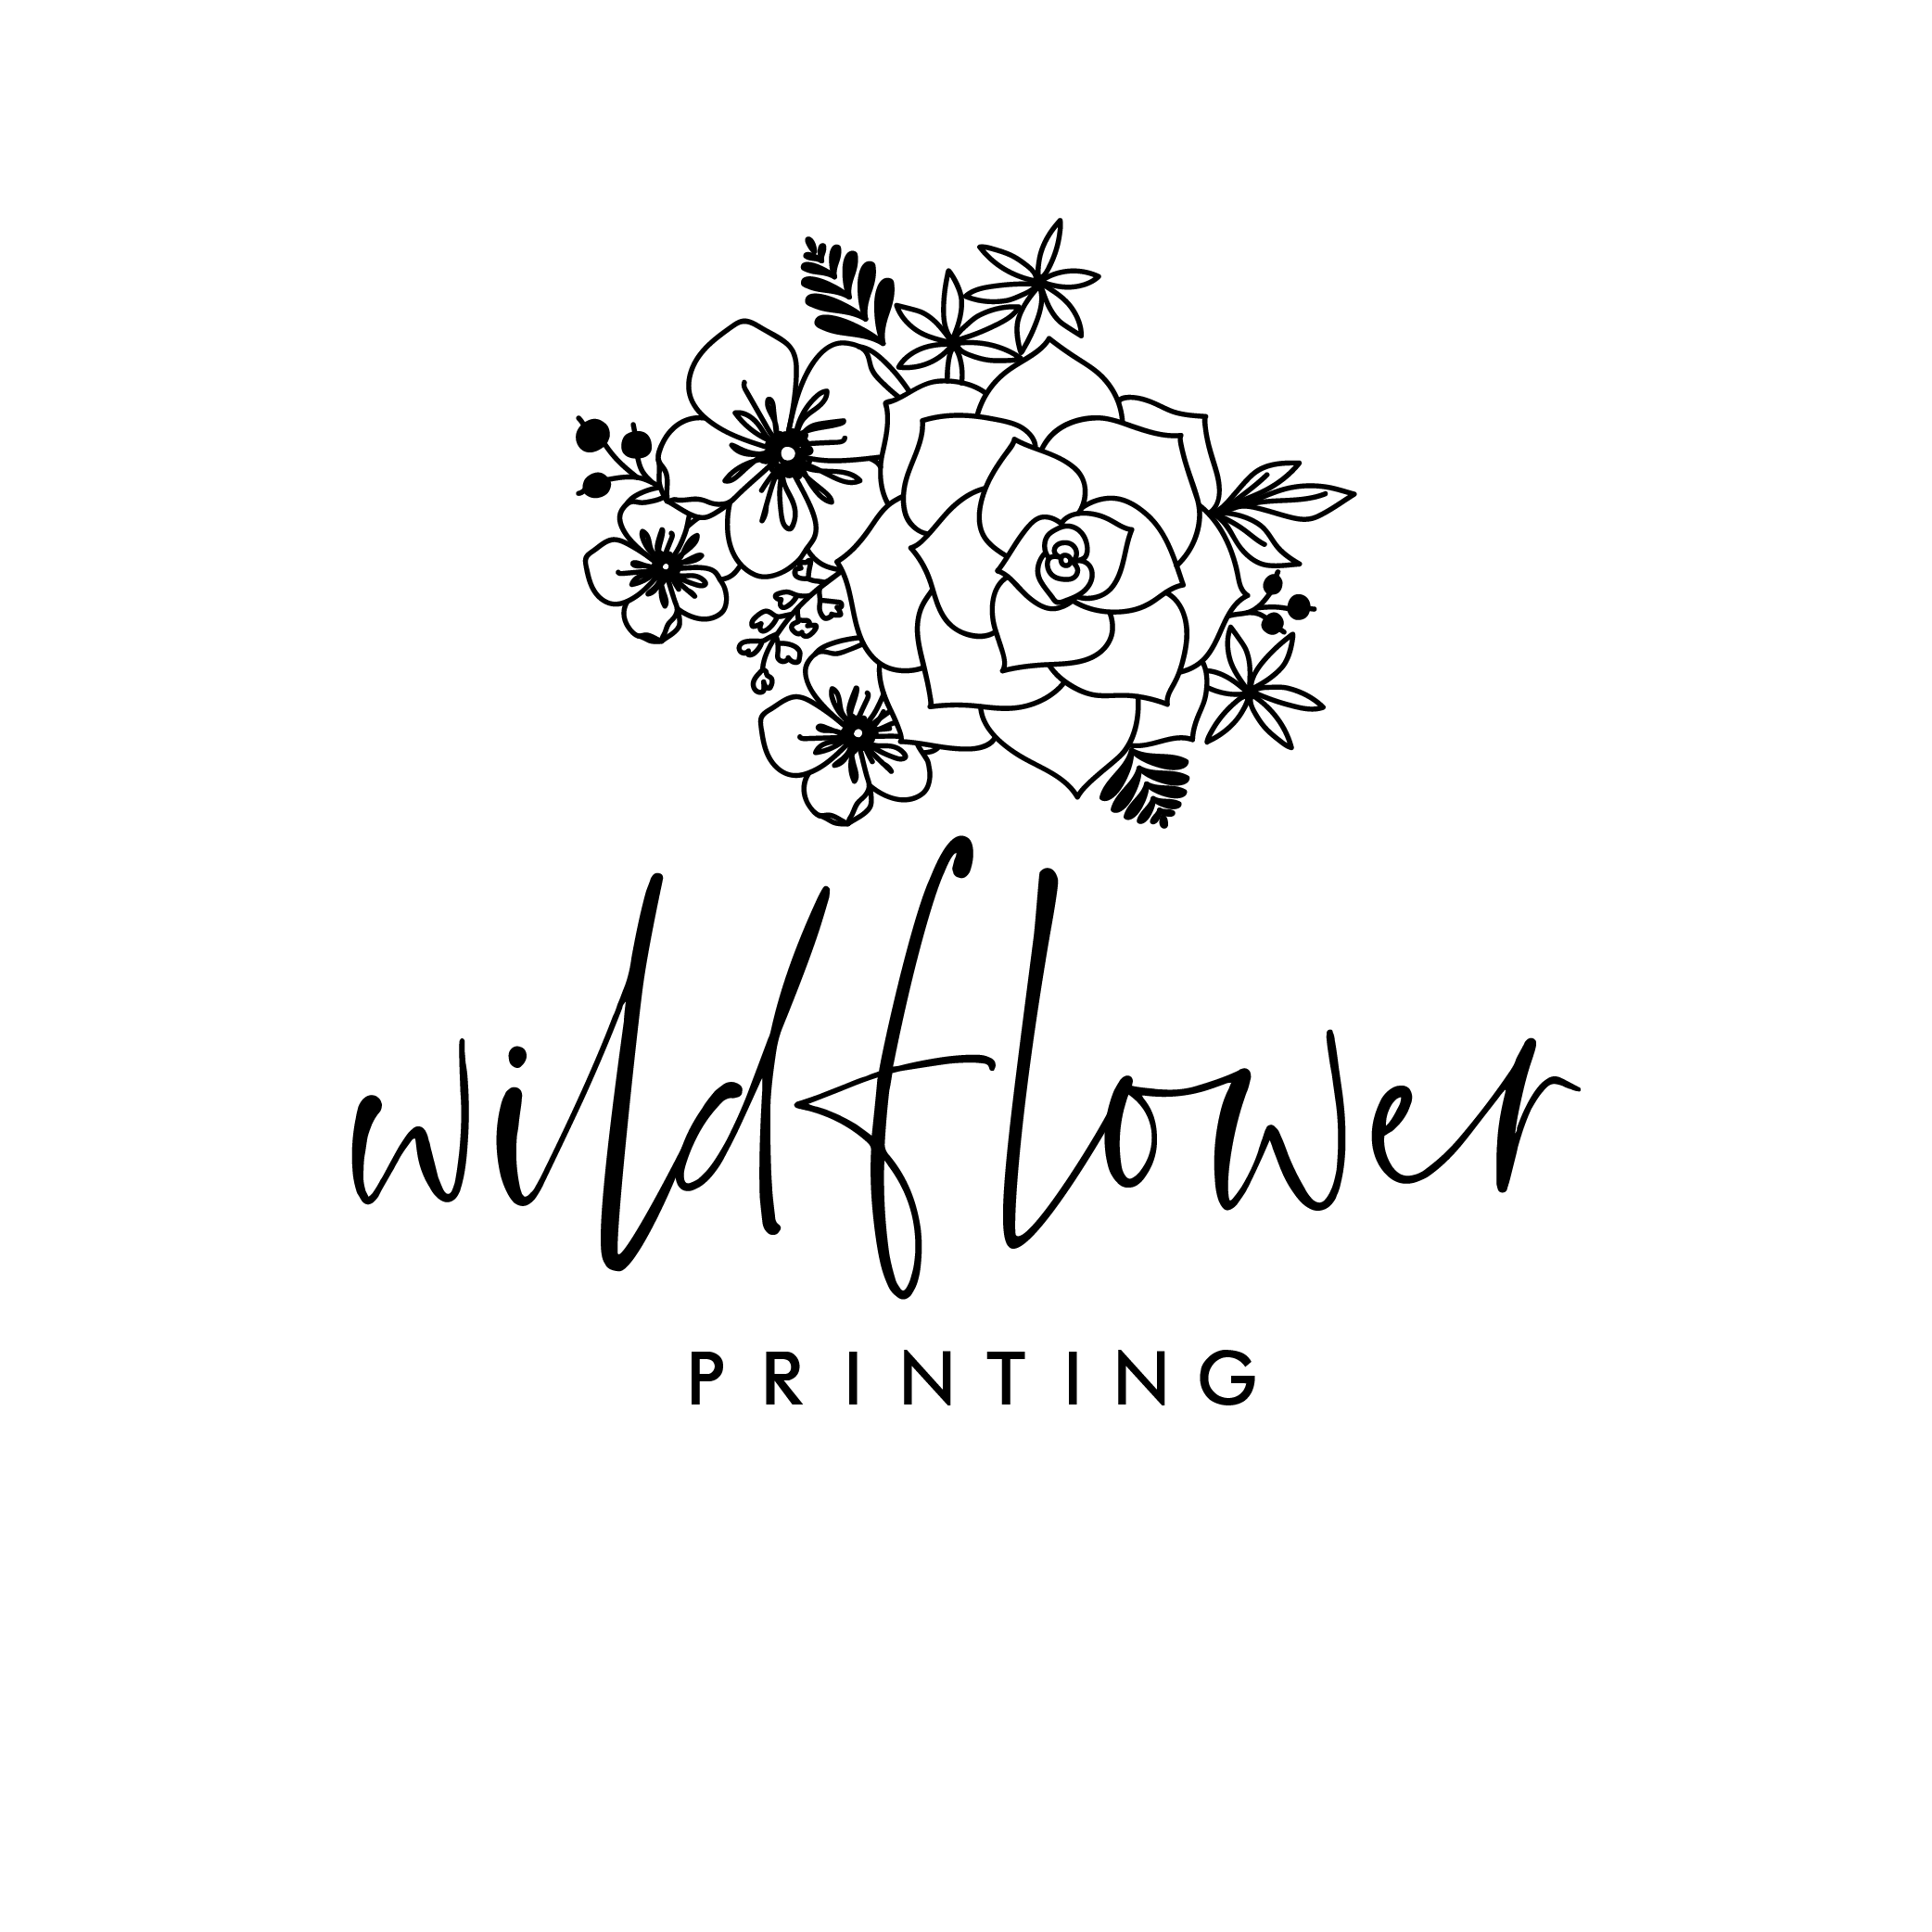 Wildflower Printing